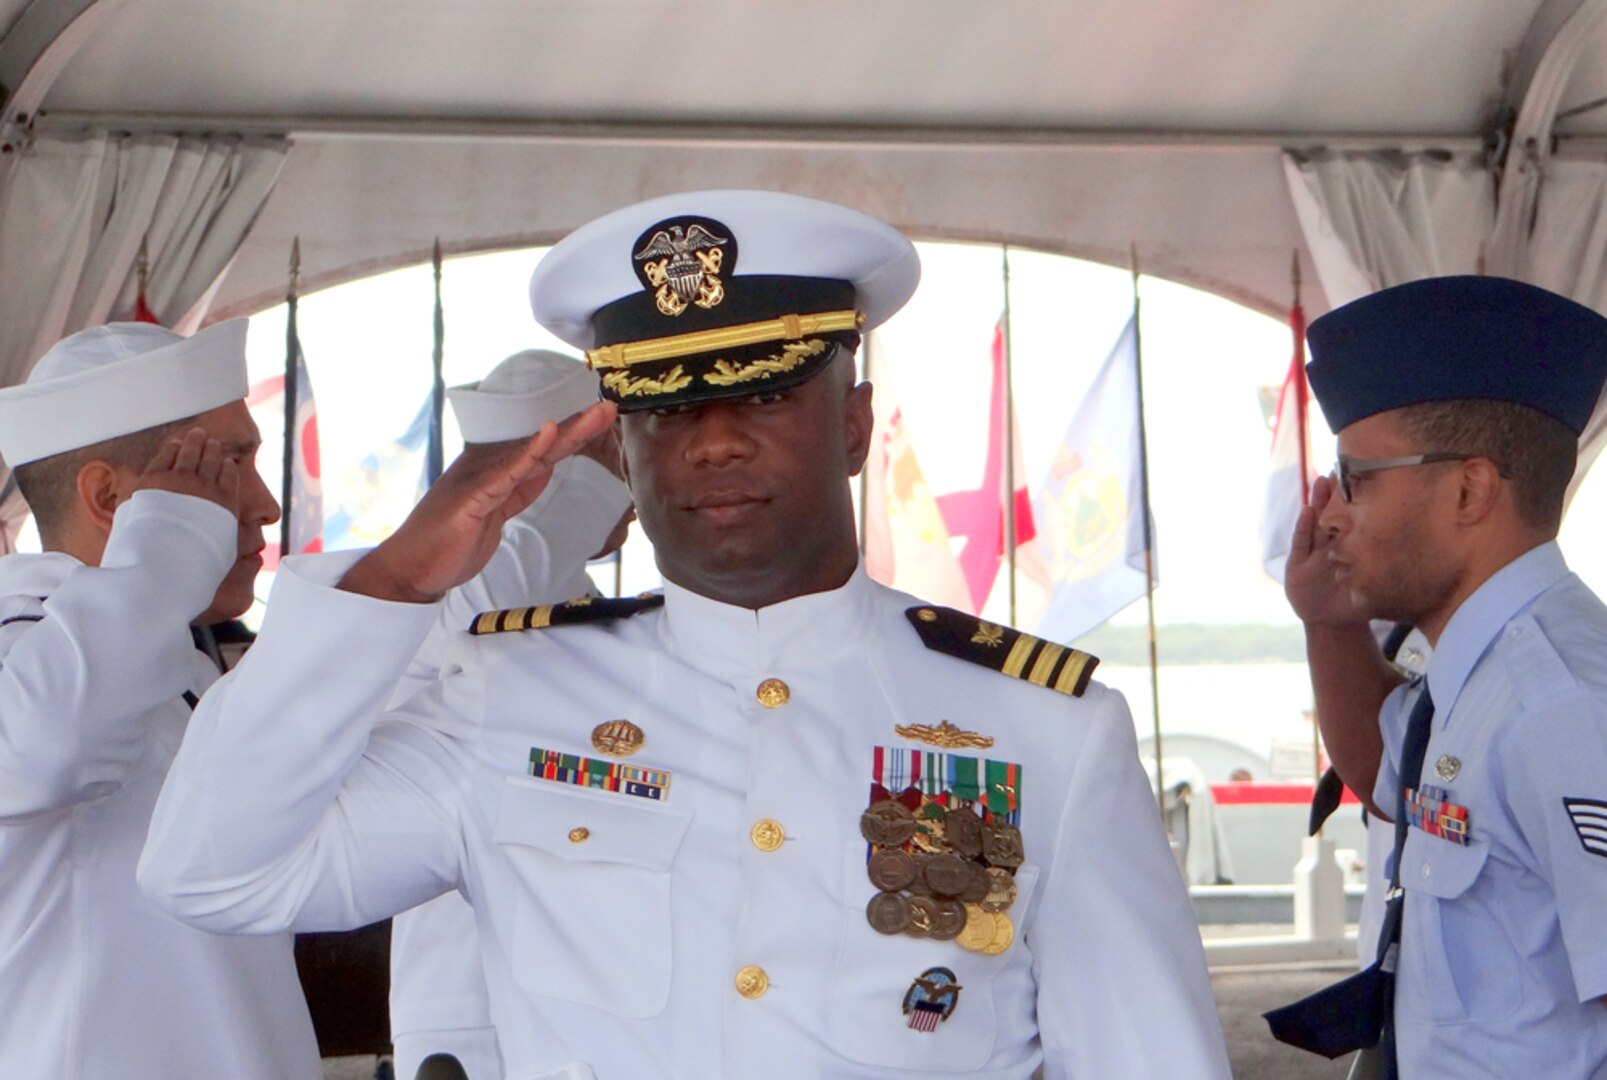 Navy Cmdr. Eric Lockett salutes